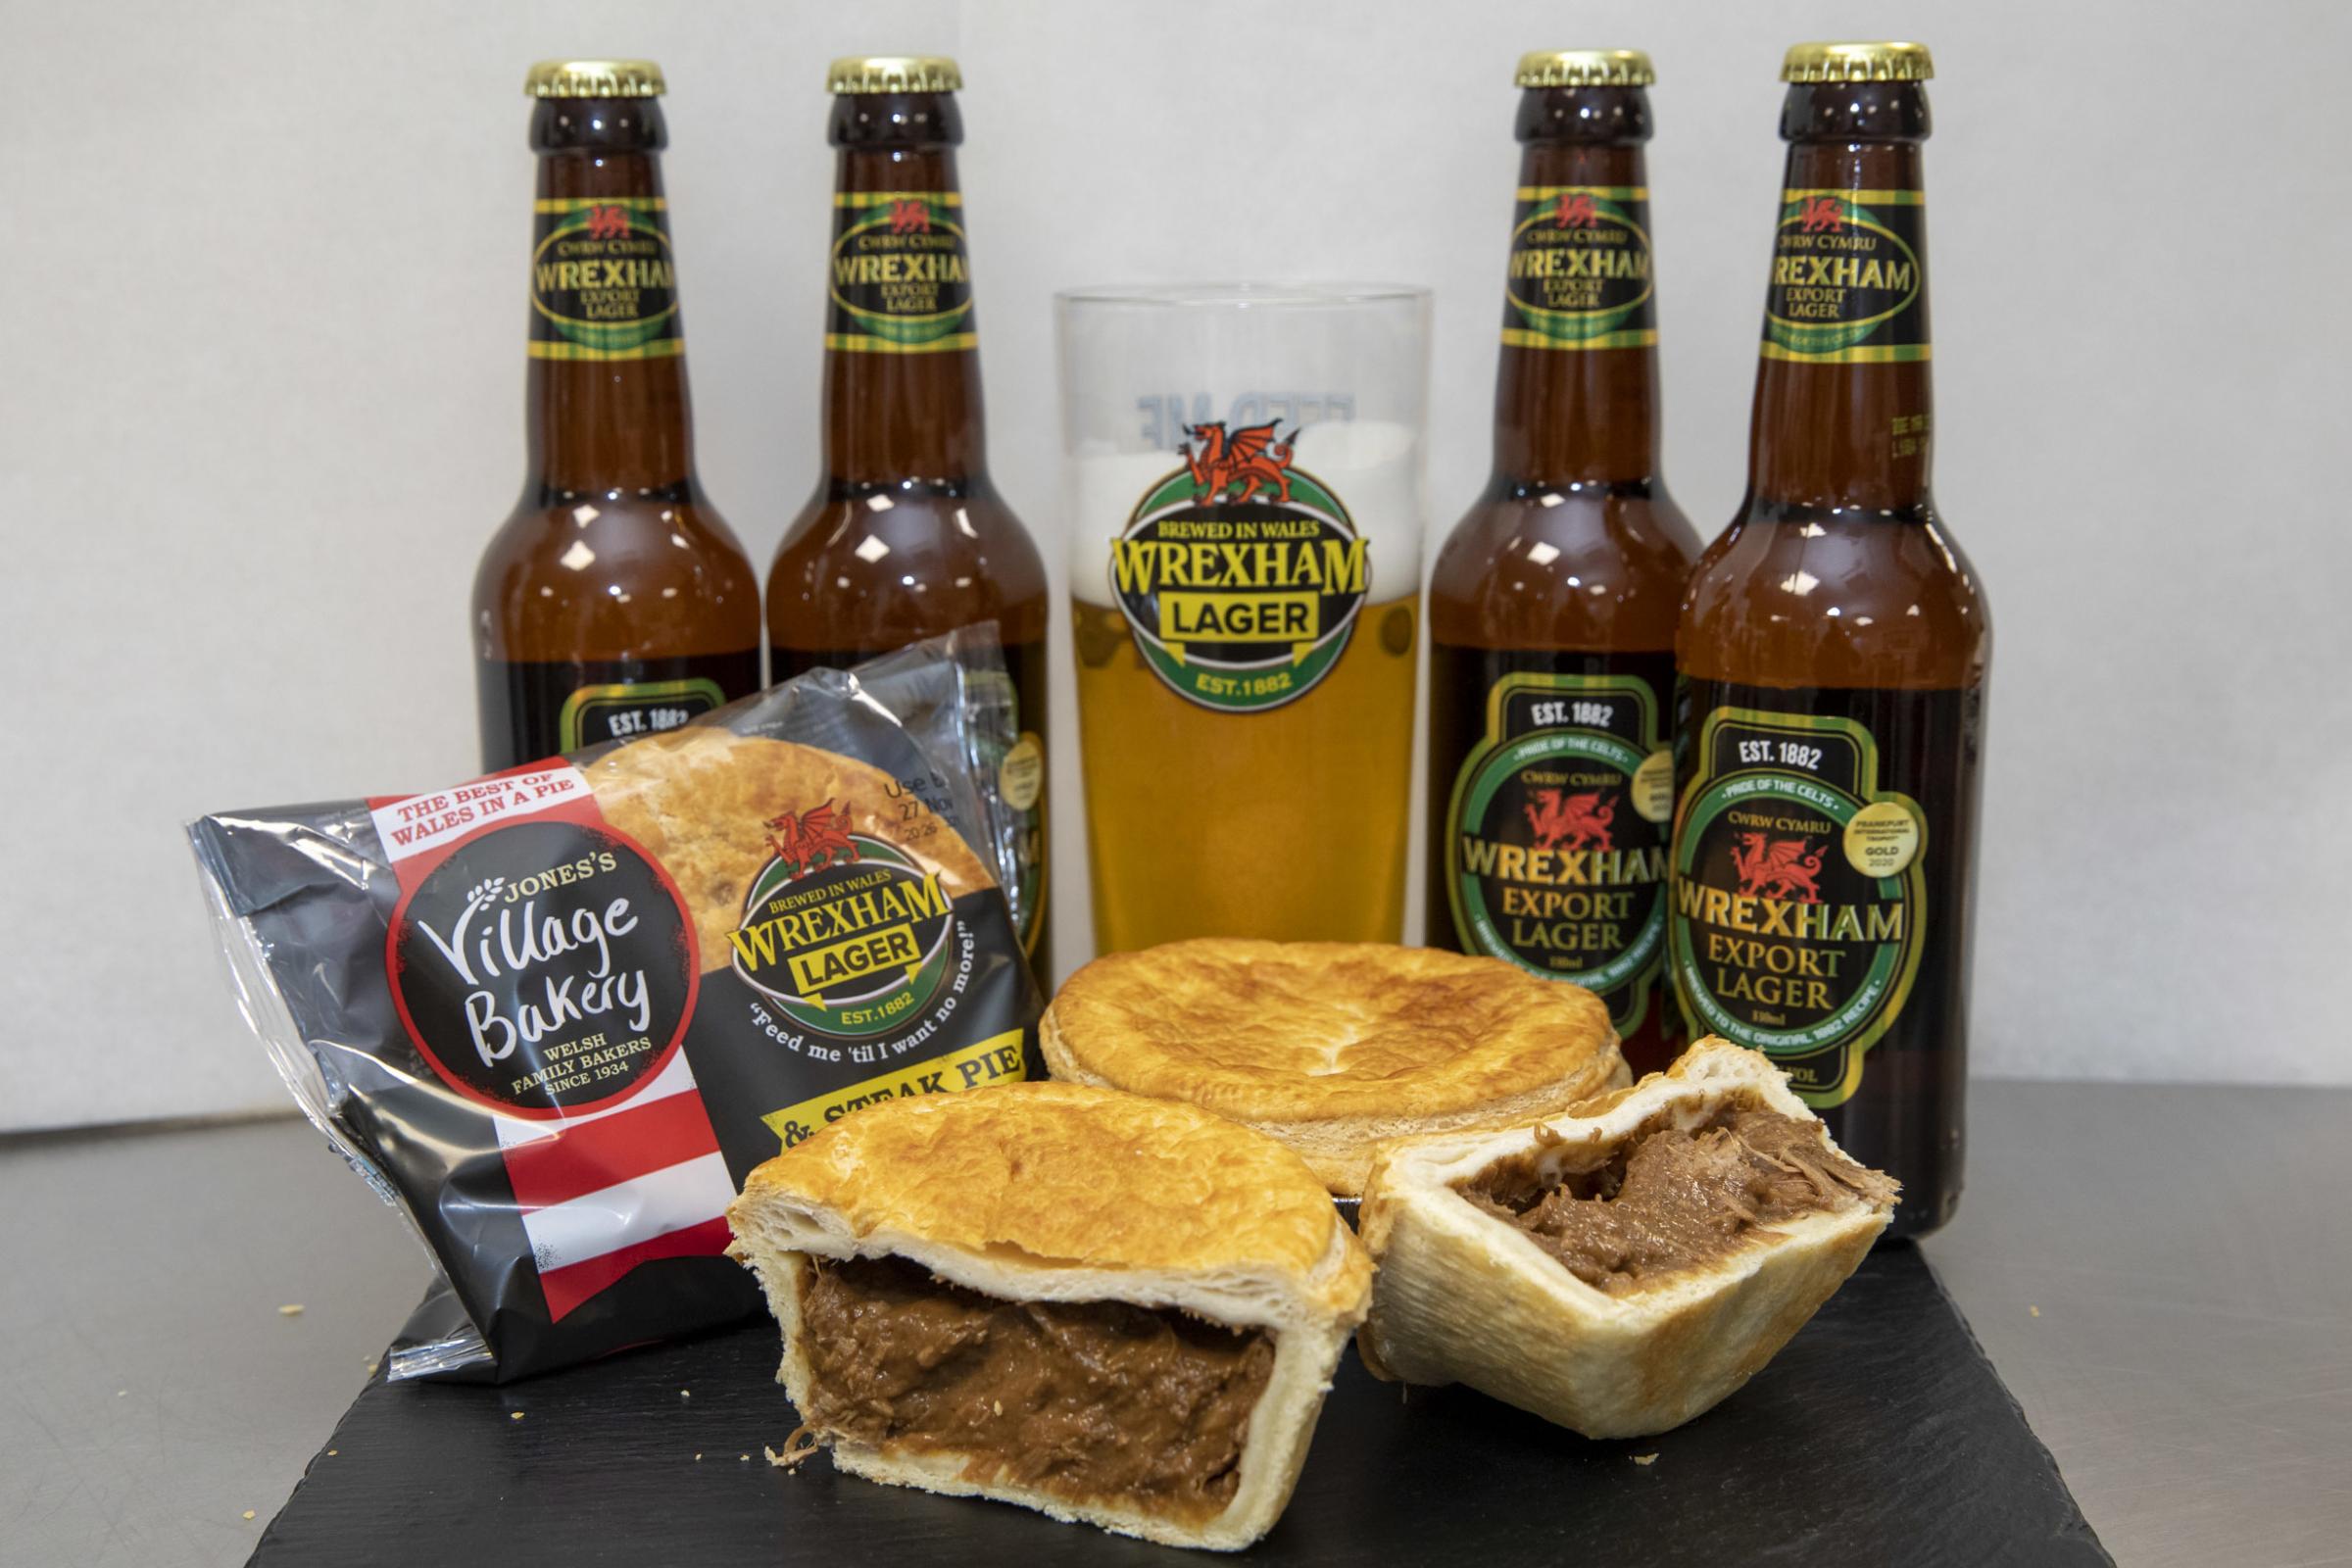 Village Bakery Wrexham produce a steak and Wrexham Lager pie; Picture Mandy Jones